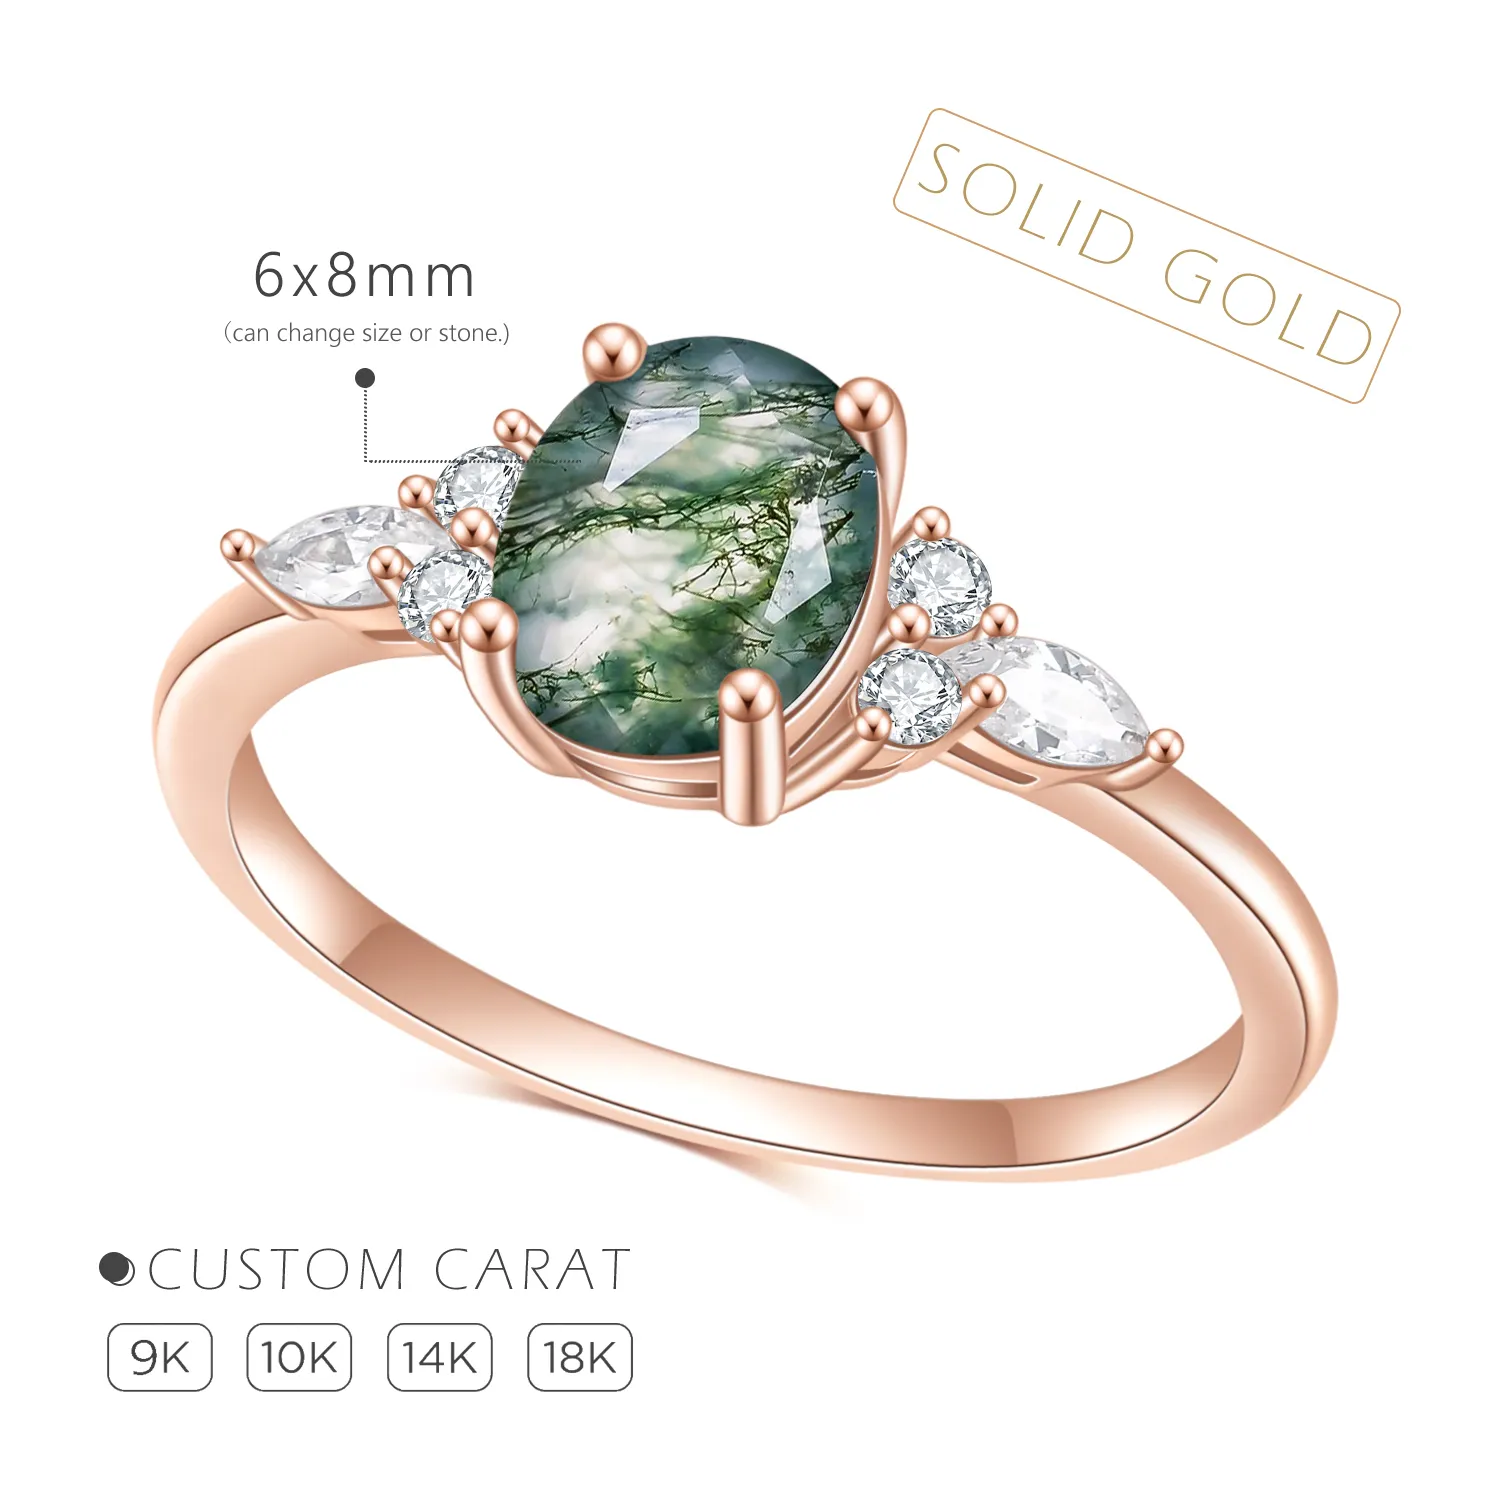 OL1042 Abiding Chinese Jewelry Factory Oval 6x8mm Gems Moss Agate Wedding Custom 9K 10K 14K 18K Solid 2 Gram Gold Ring Designs